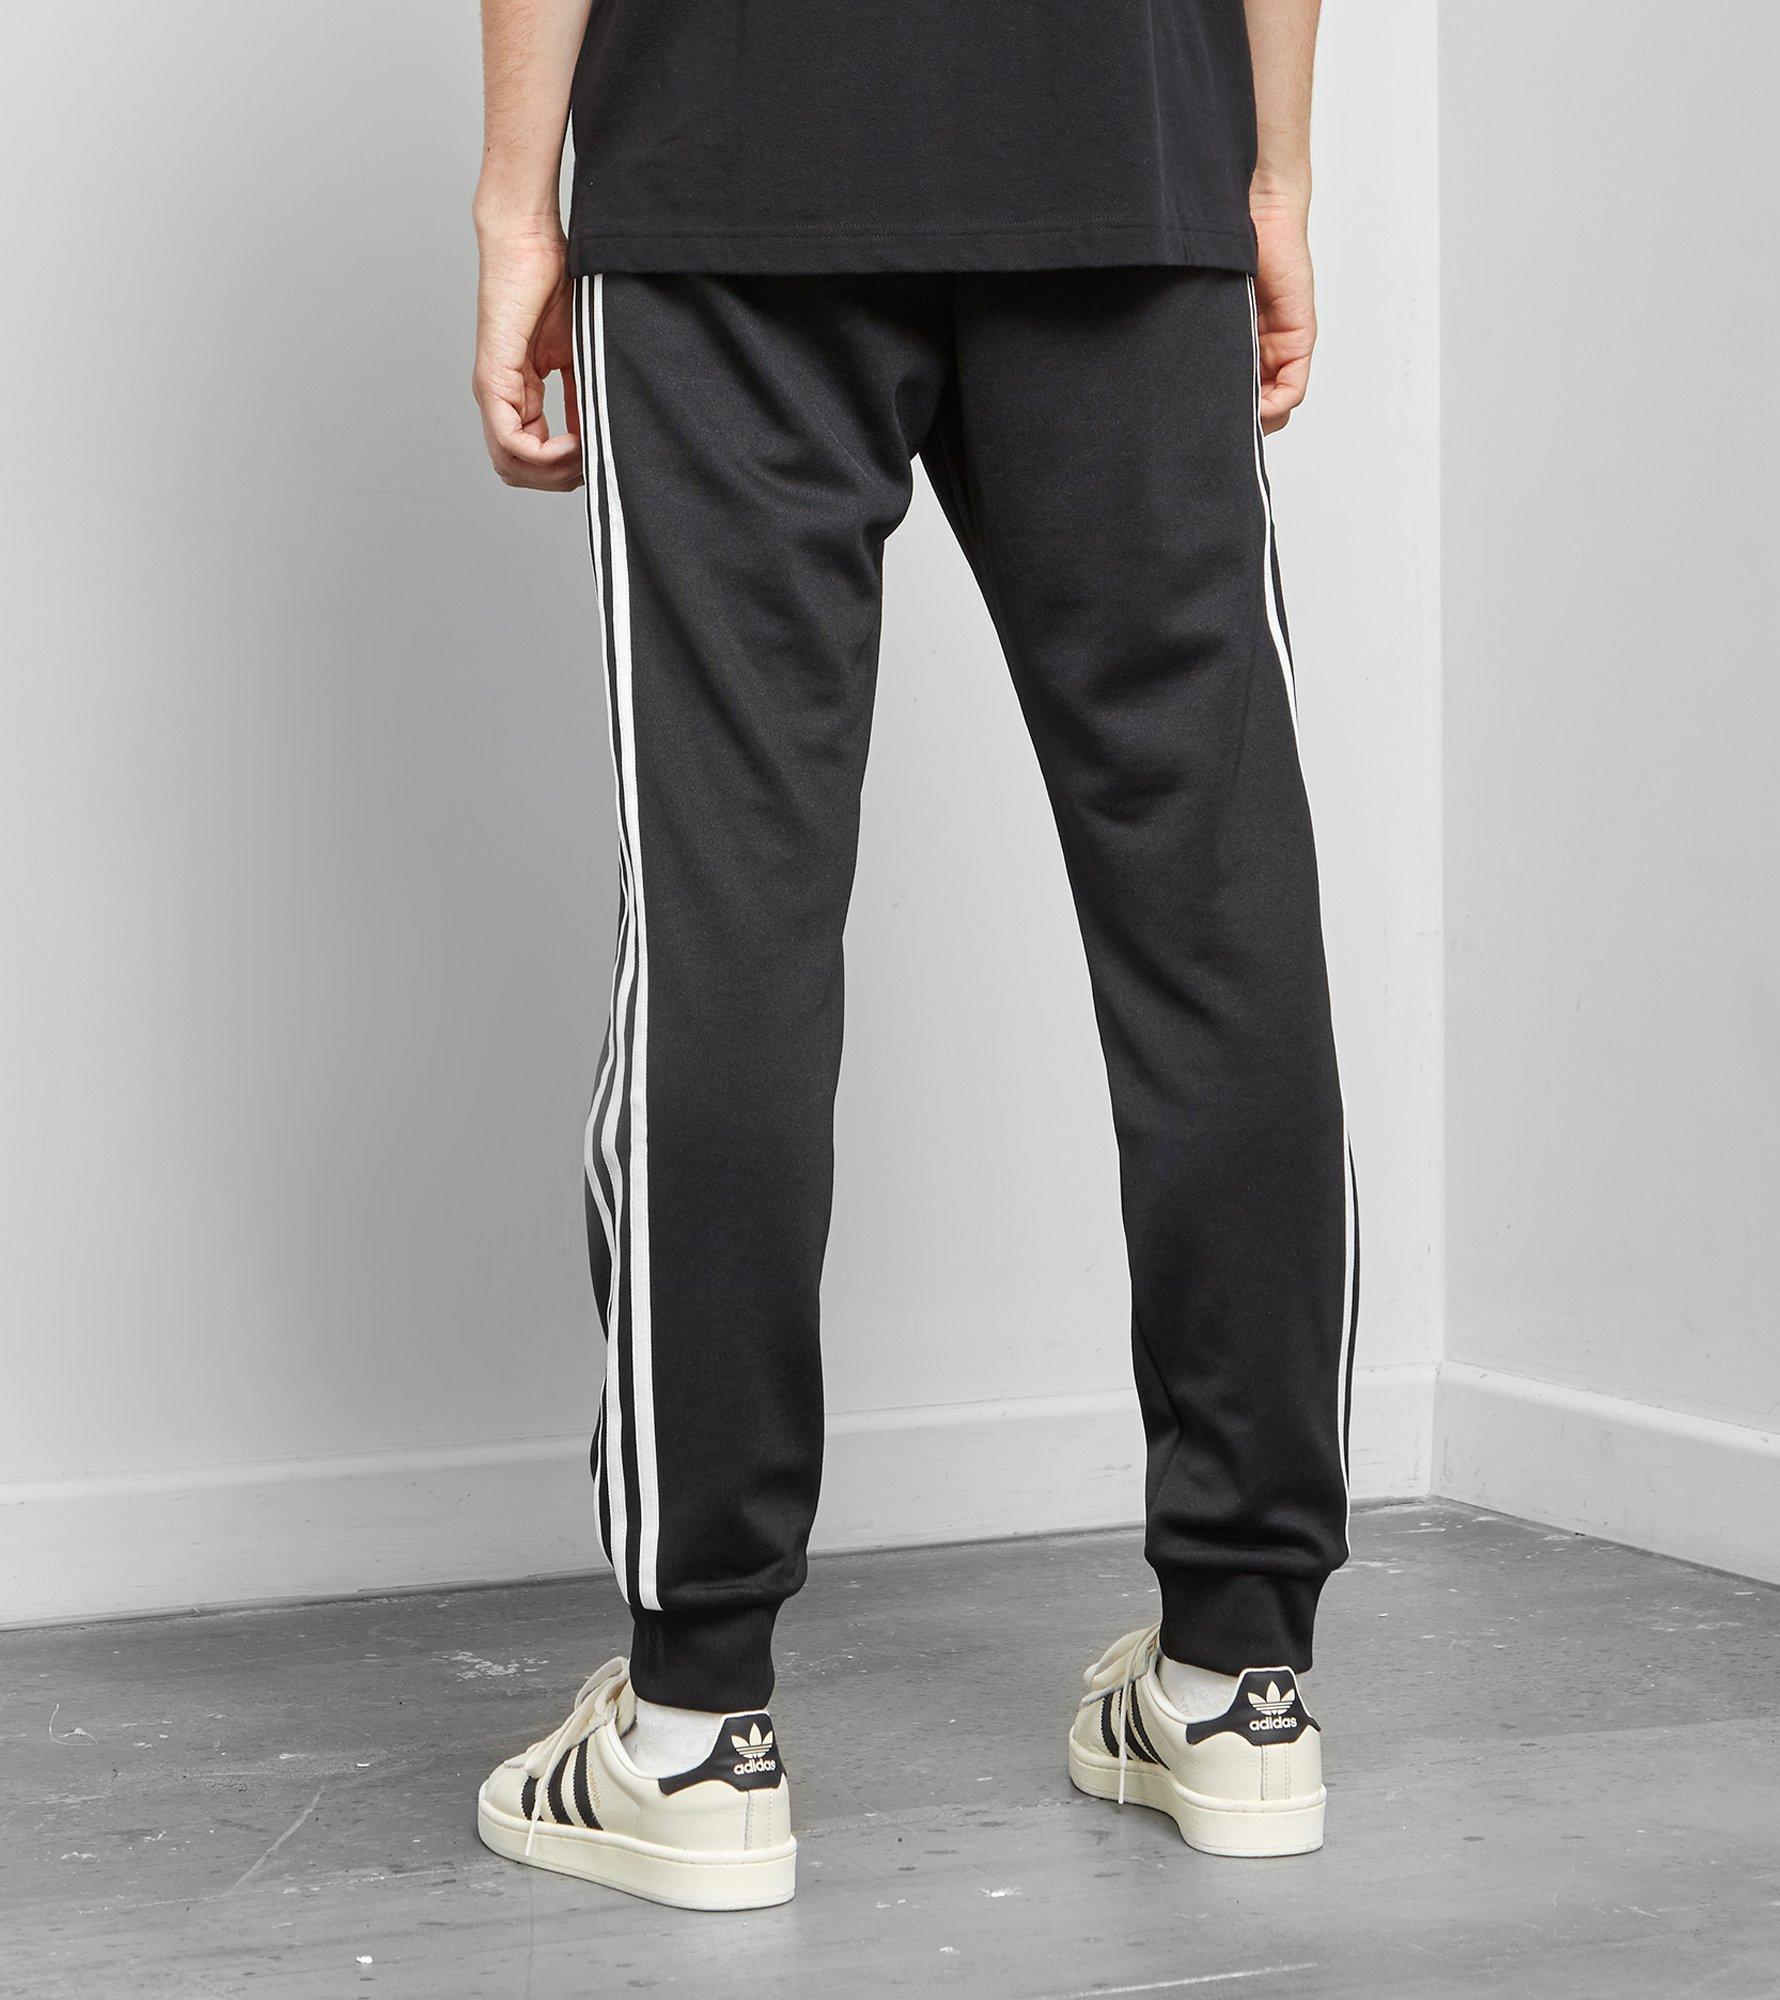 adidas Originals Superstar Cuffed Track Pants in Black for Men - Lyst